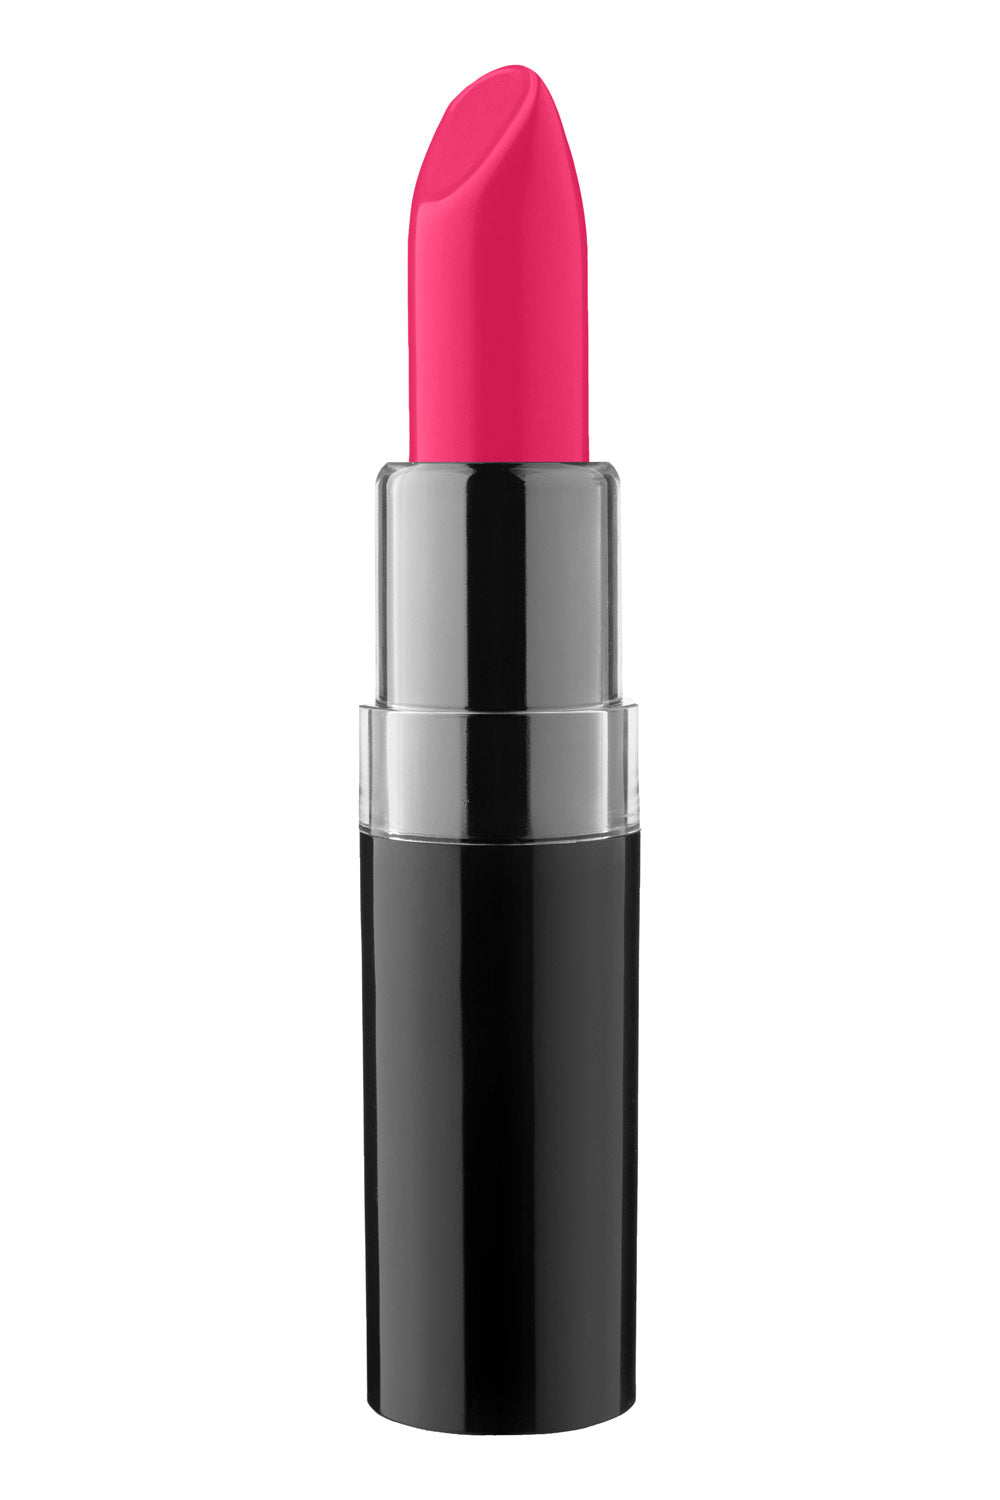 Poodle Skirt - Lipstick